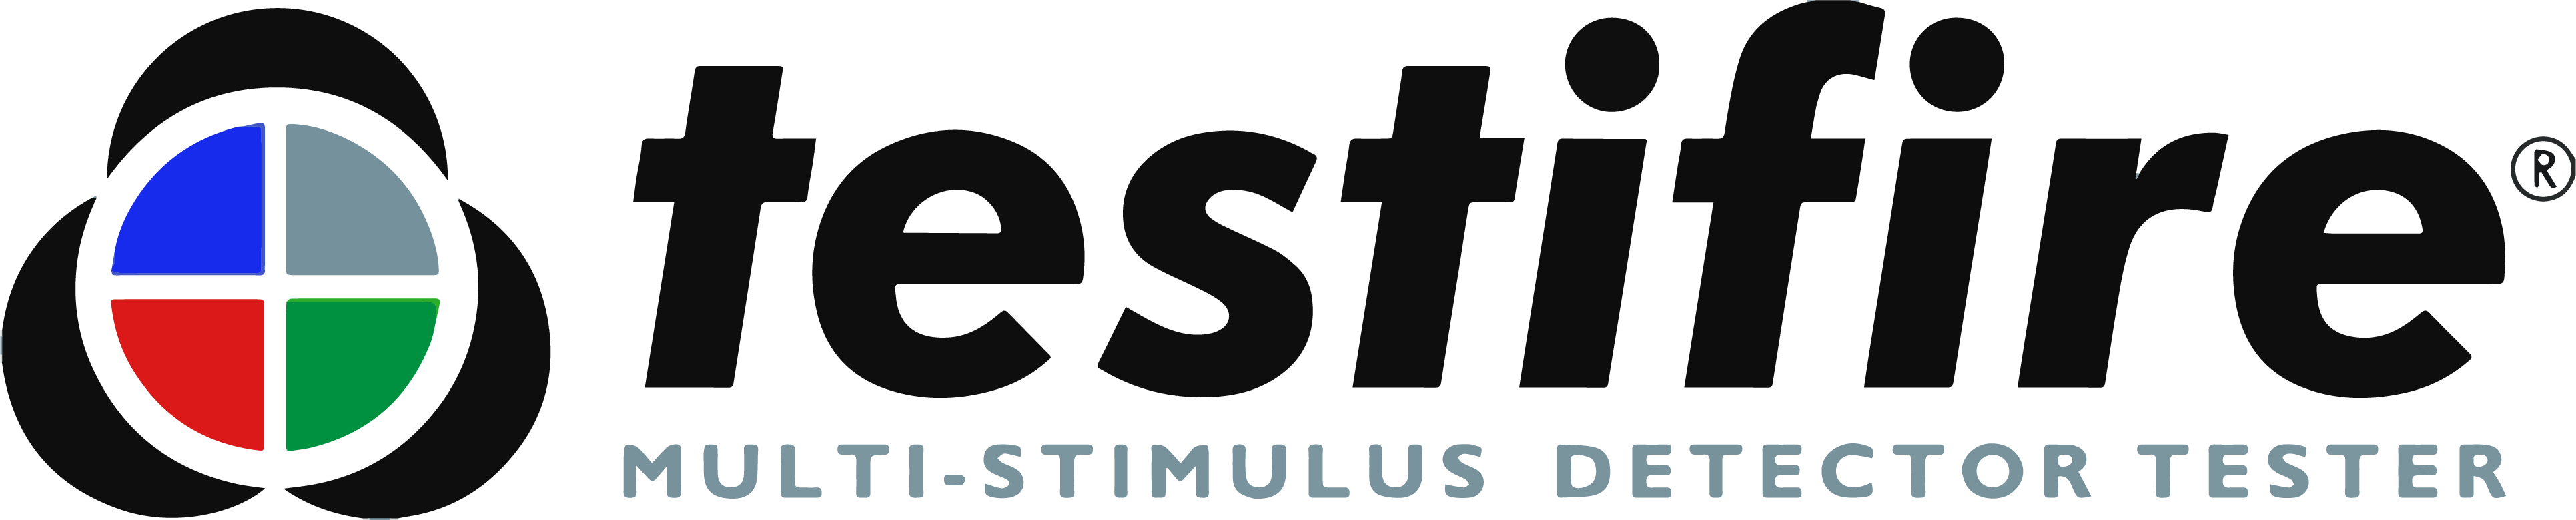 testifire multi-stimulus detector tester logo